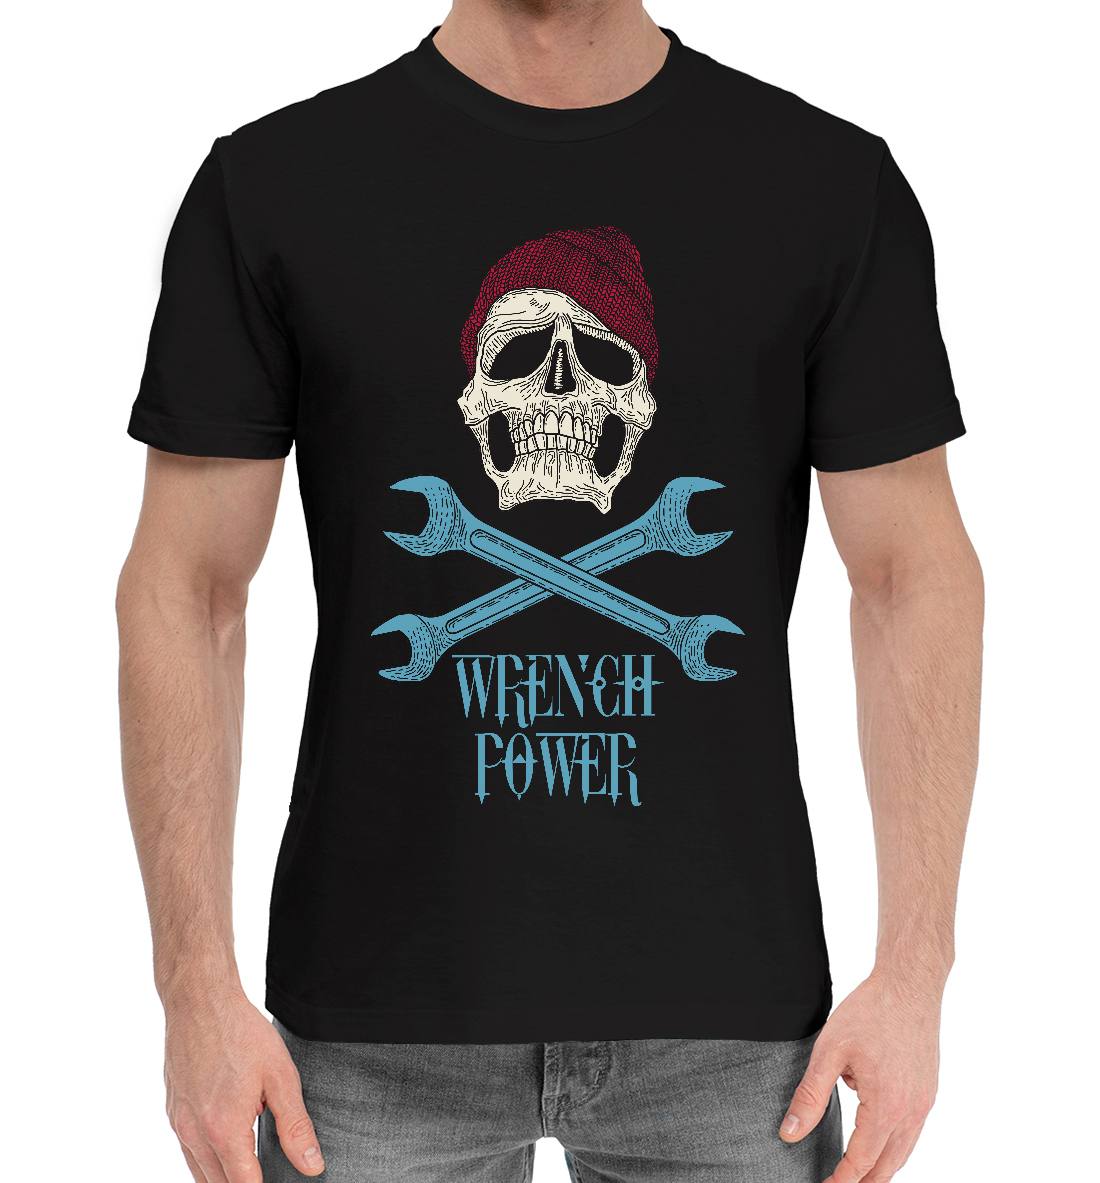 Мужская Хлопковая футболка с принтом Wrench power, артикул SKU-974471-hfu-2mp